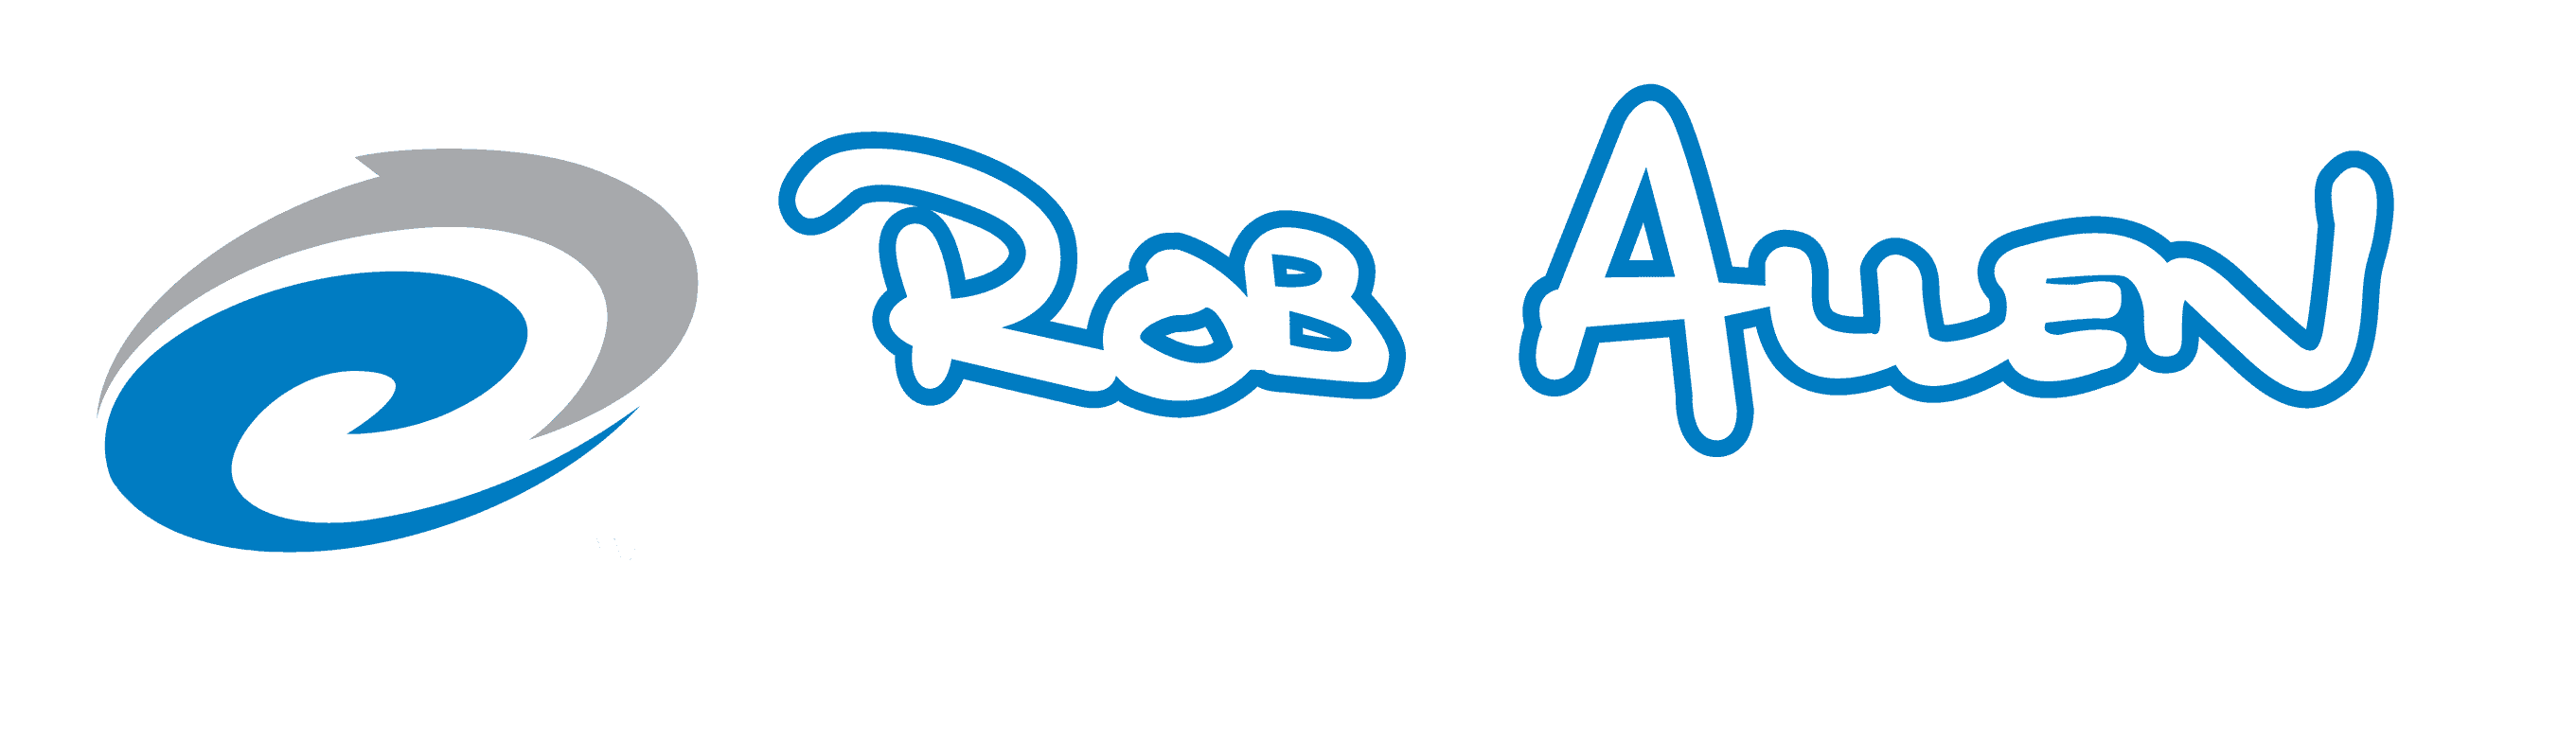 Rob Allen - Spearfishing UK